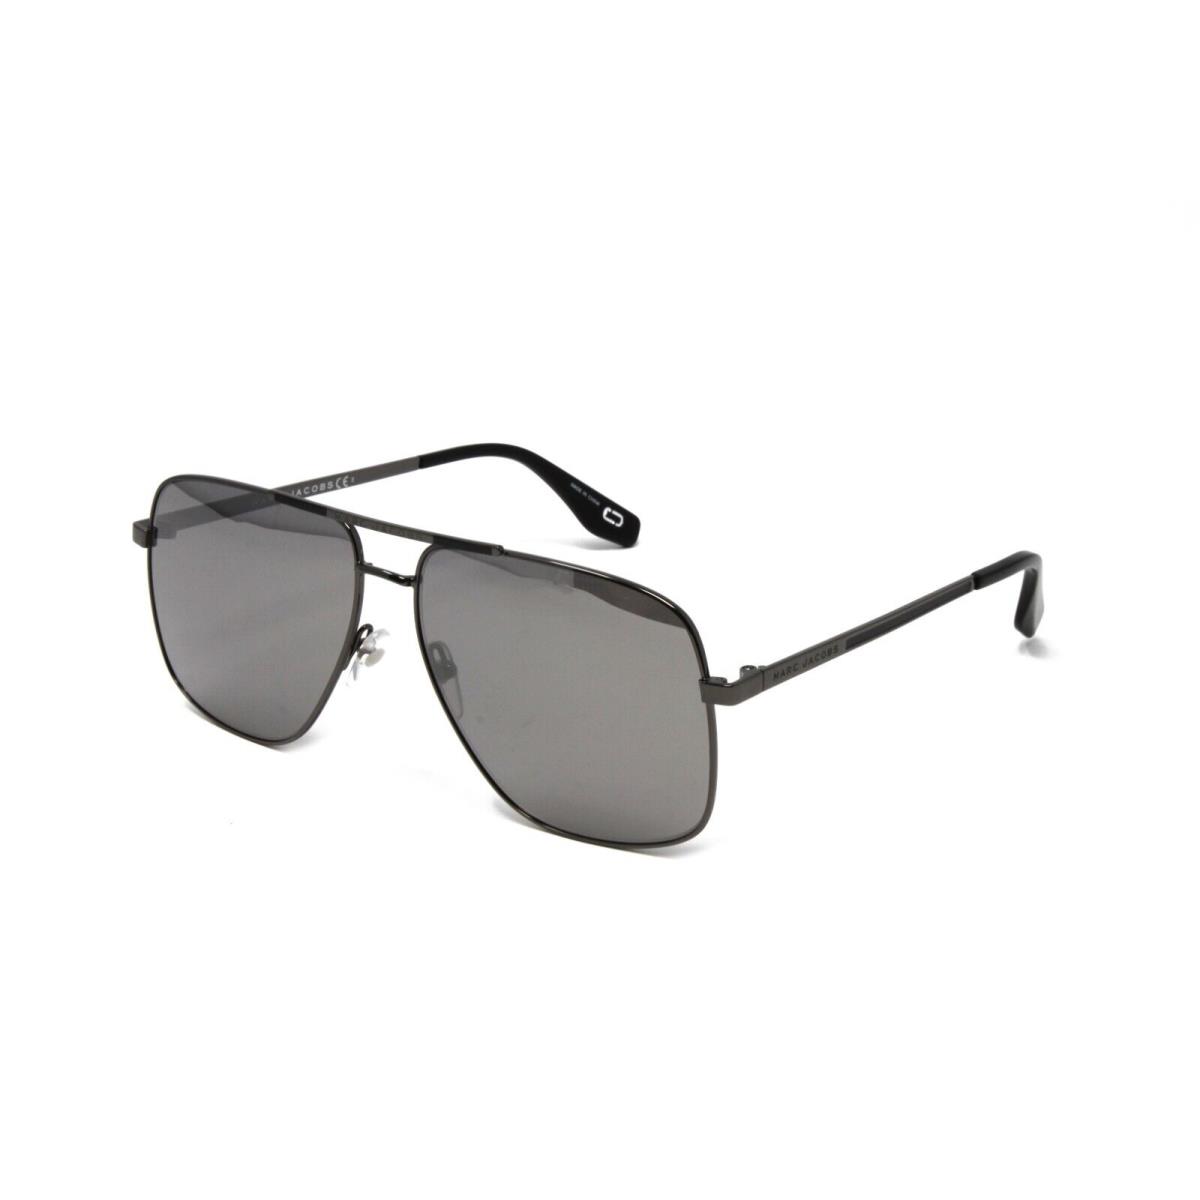 Marc Jacobs Square Men`s Sunglasses 387/S 807 Black 60mm Grey Mirror Lens - Frame: Black, Lens: Gray